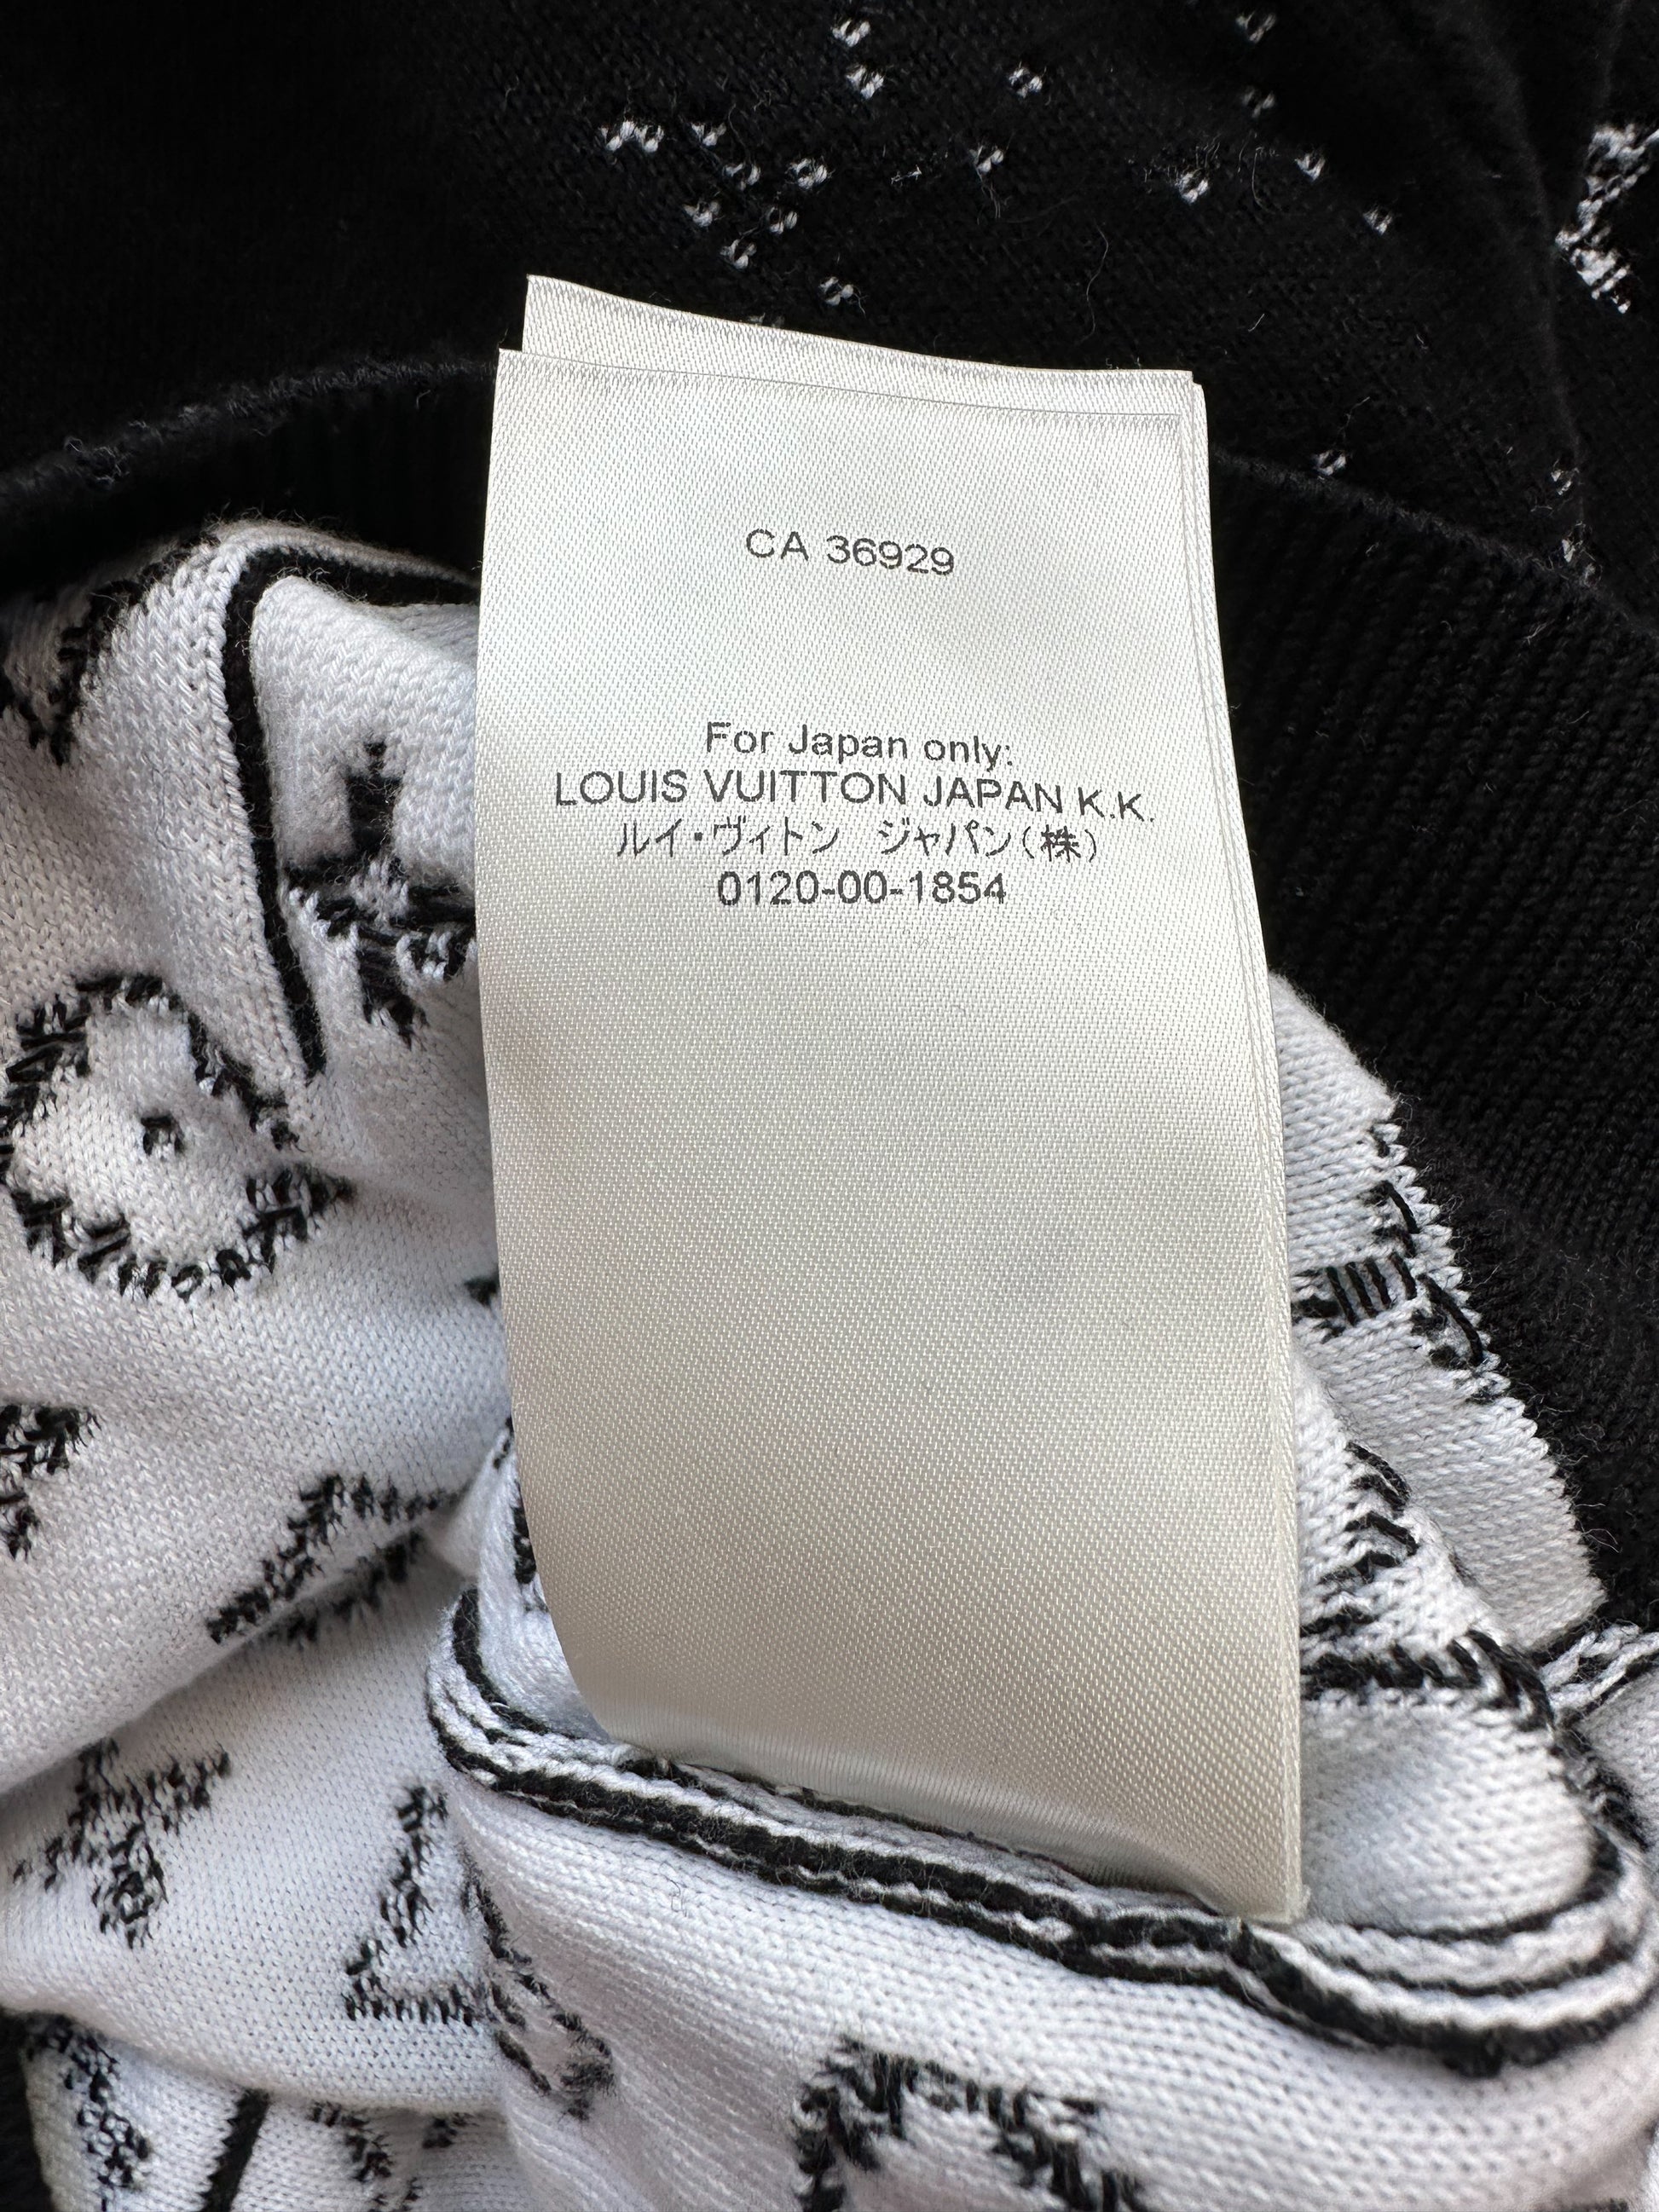 Louis Vuitton Monogram Gradient Hoodie, Black, S